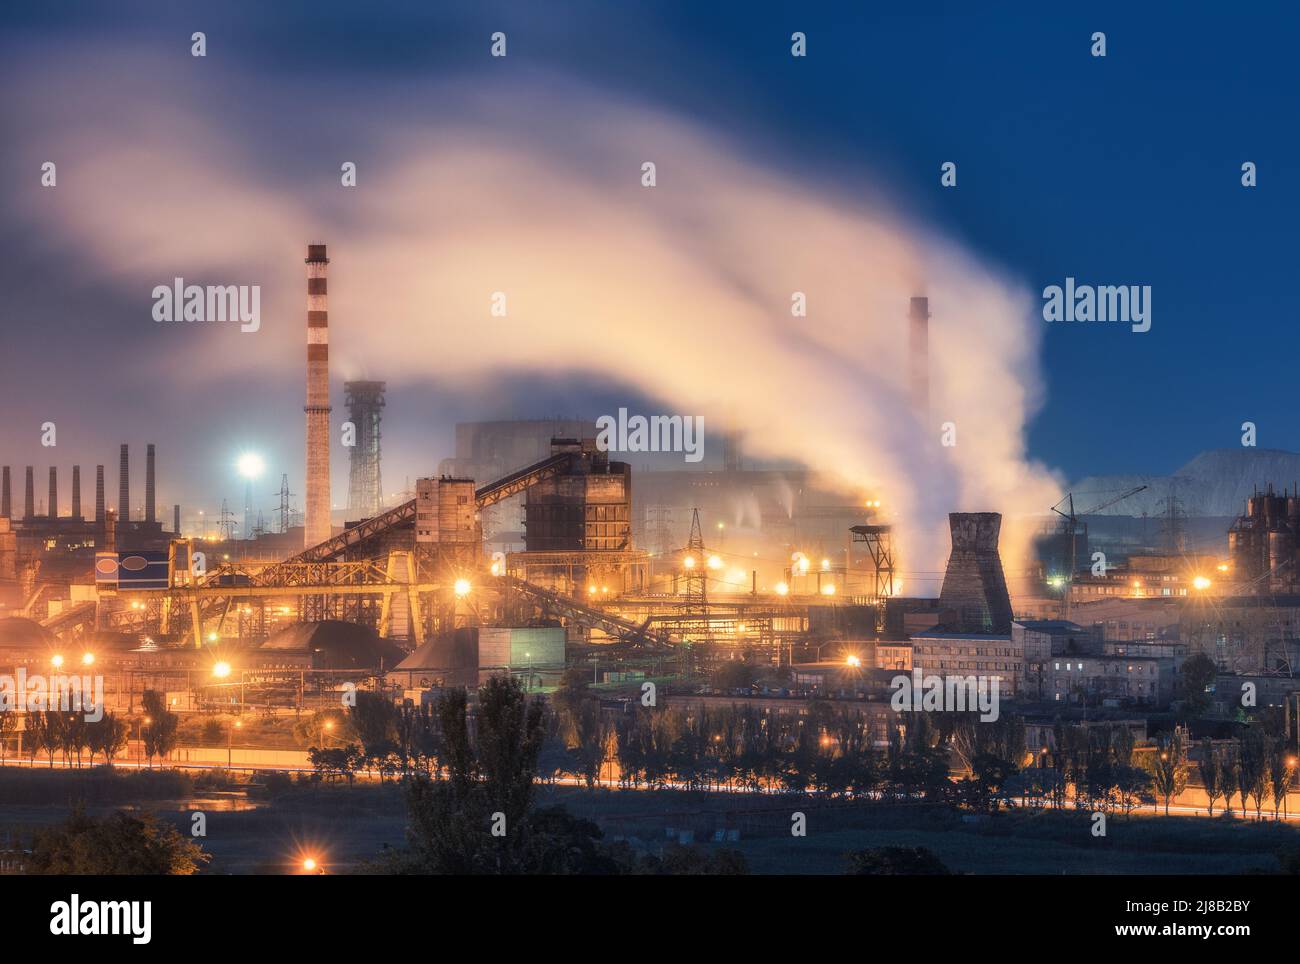 Azovstal in Mariupol, Ukraine before war. Steel plant at night Stock Photo